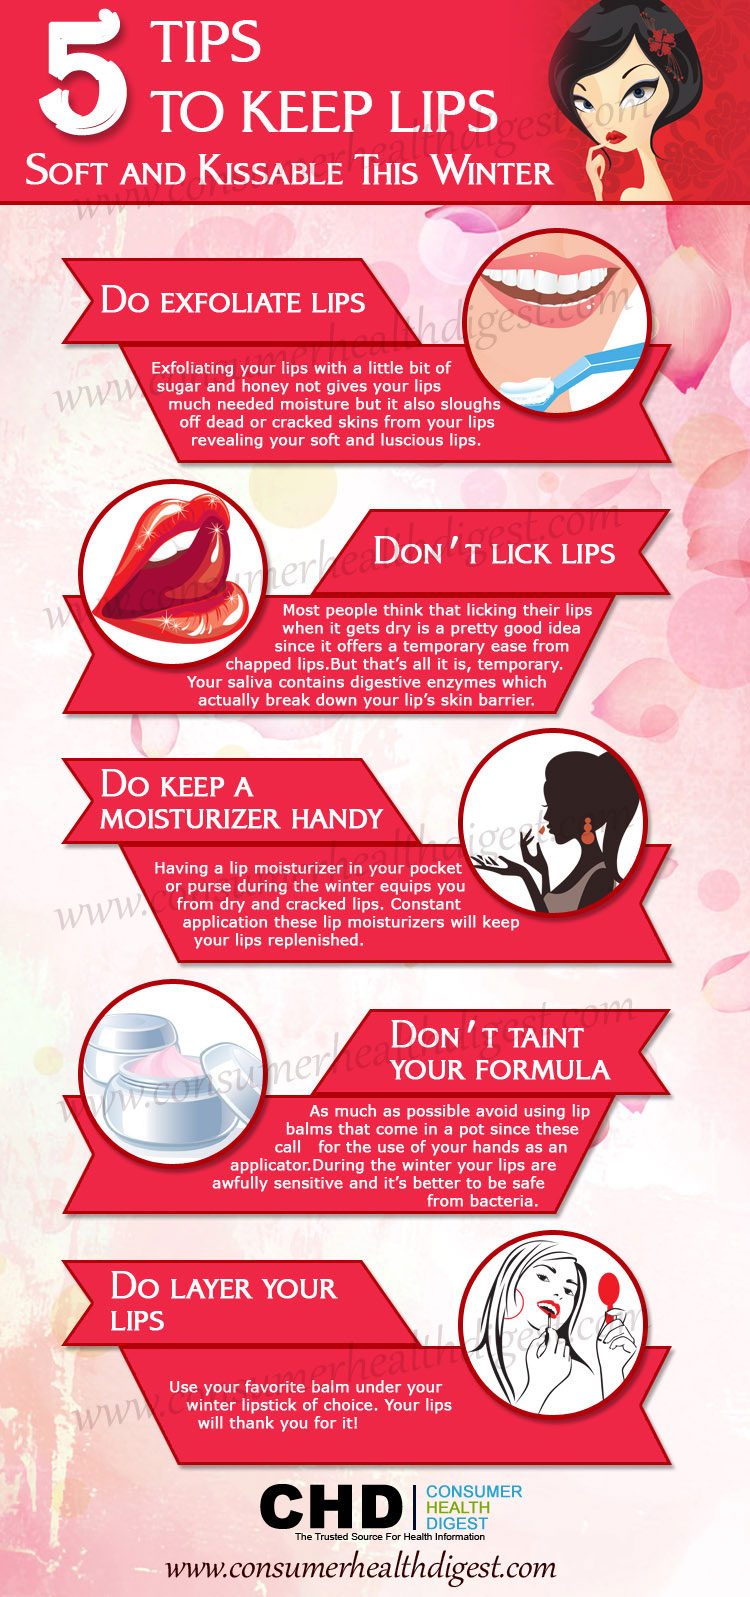 1 tips-to-keep-lips-soft-and-kissable